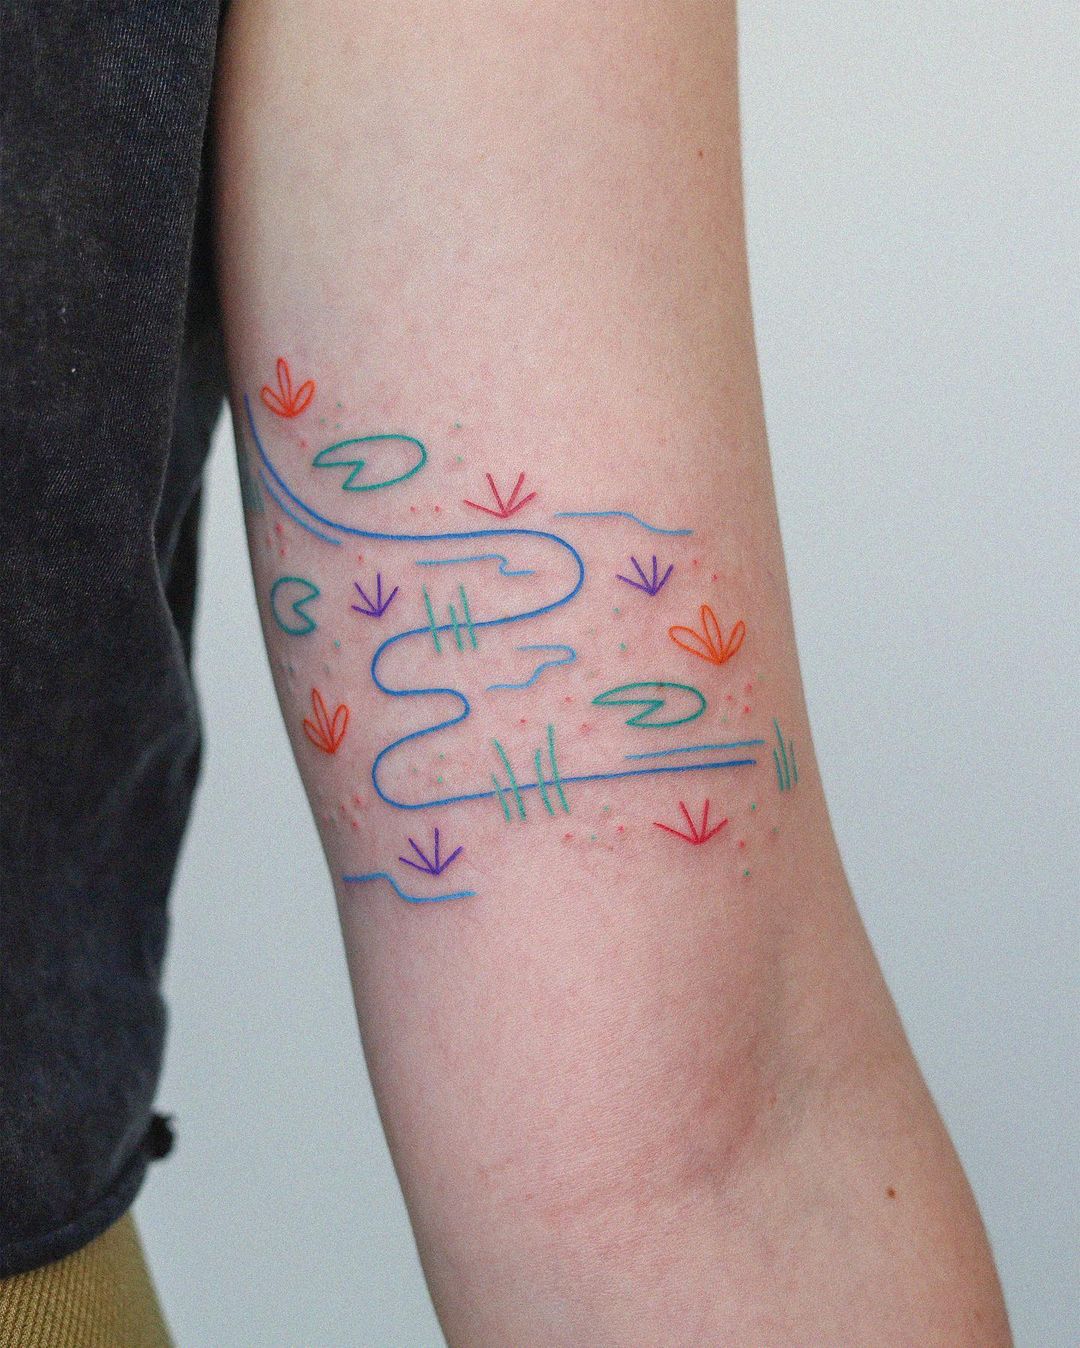 river side tattoo design by notsoevil.ink